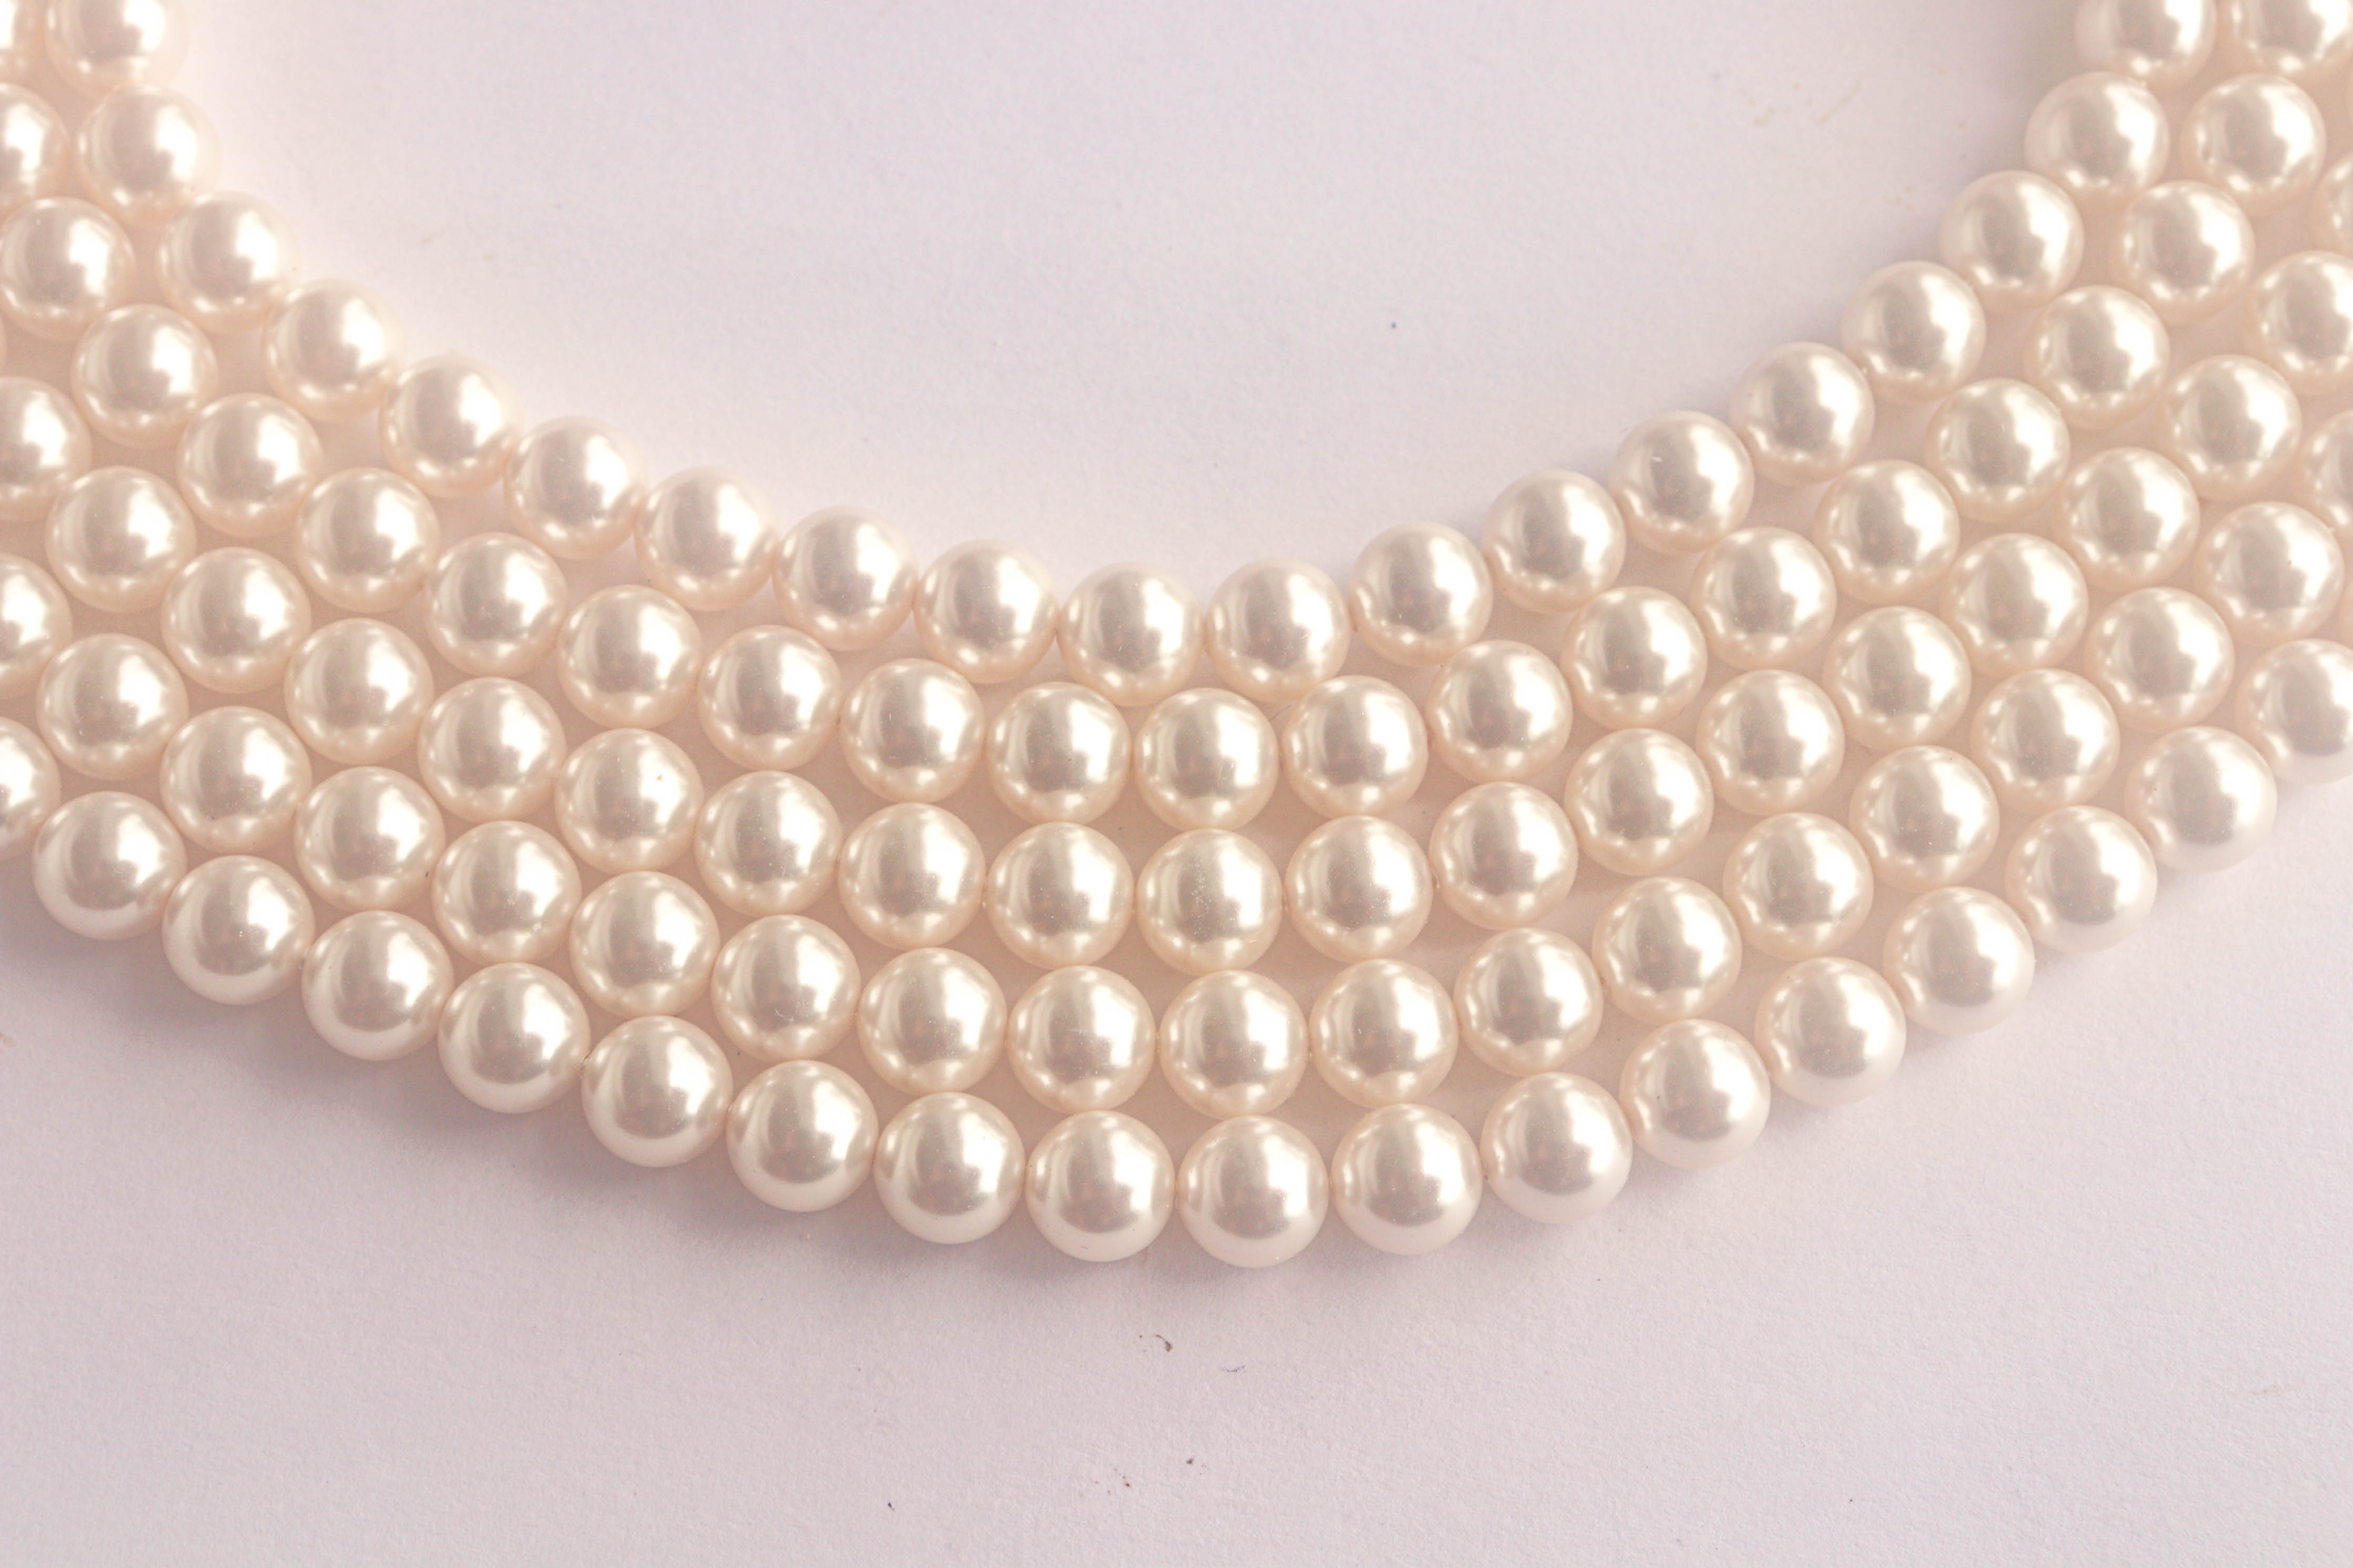 6mm Crystal White (001 650) Genuine Swarovski 5810 Pearls Round Beads jewelry making Beadsforyourjewelry